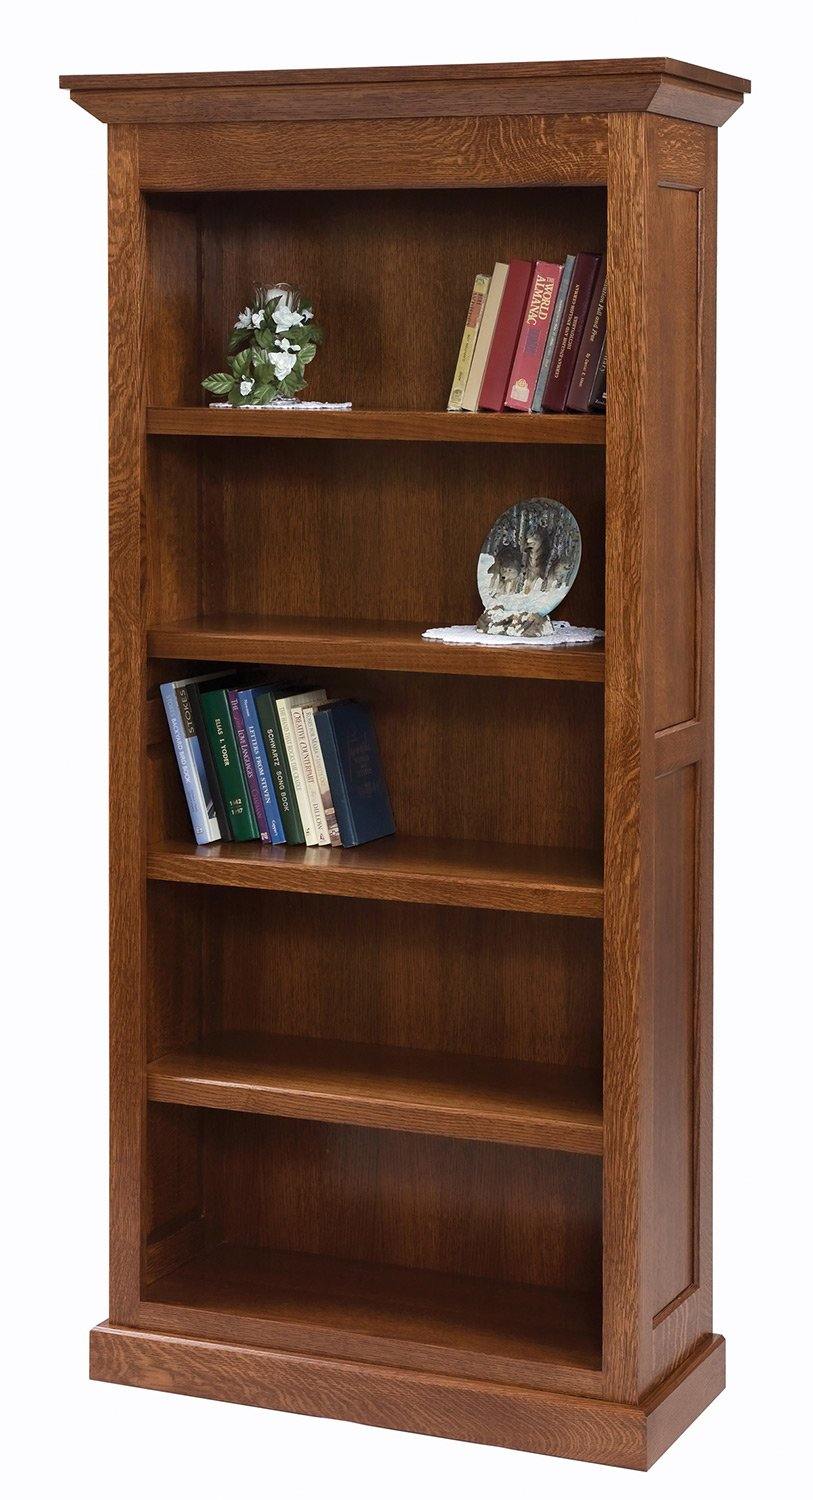 Homestead Amish Bookshelf - Charleston Amish Furniture